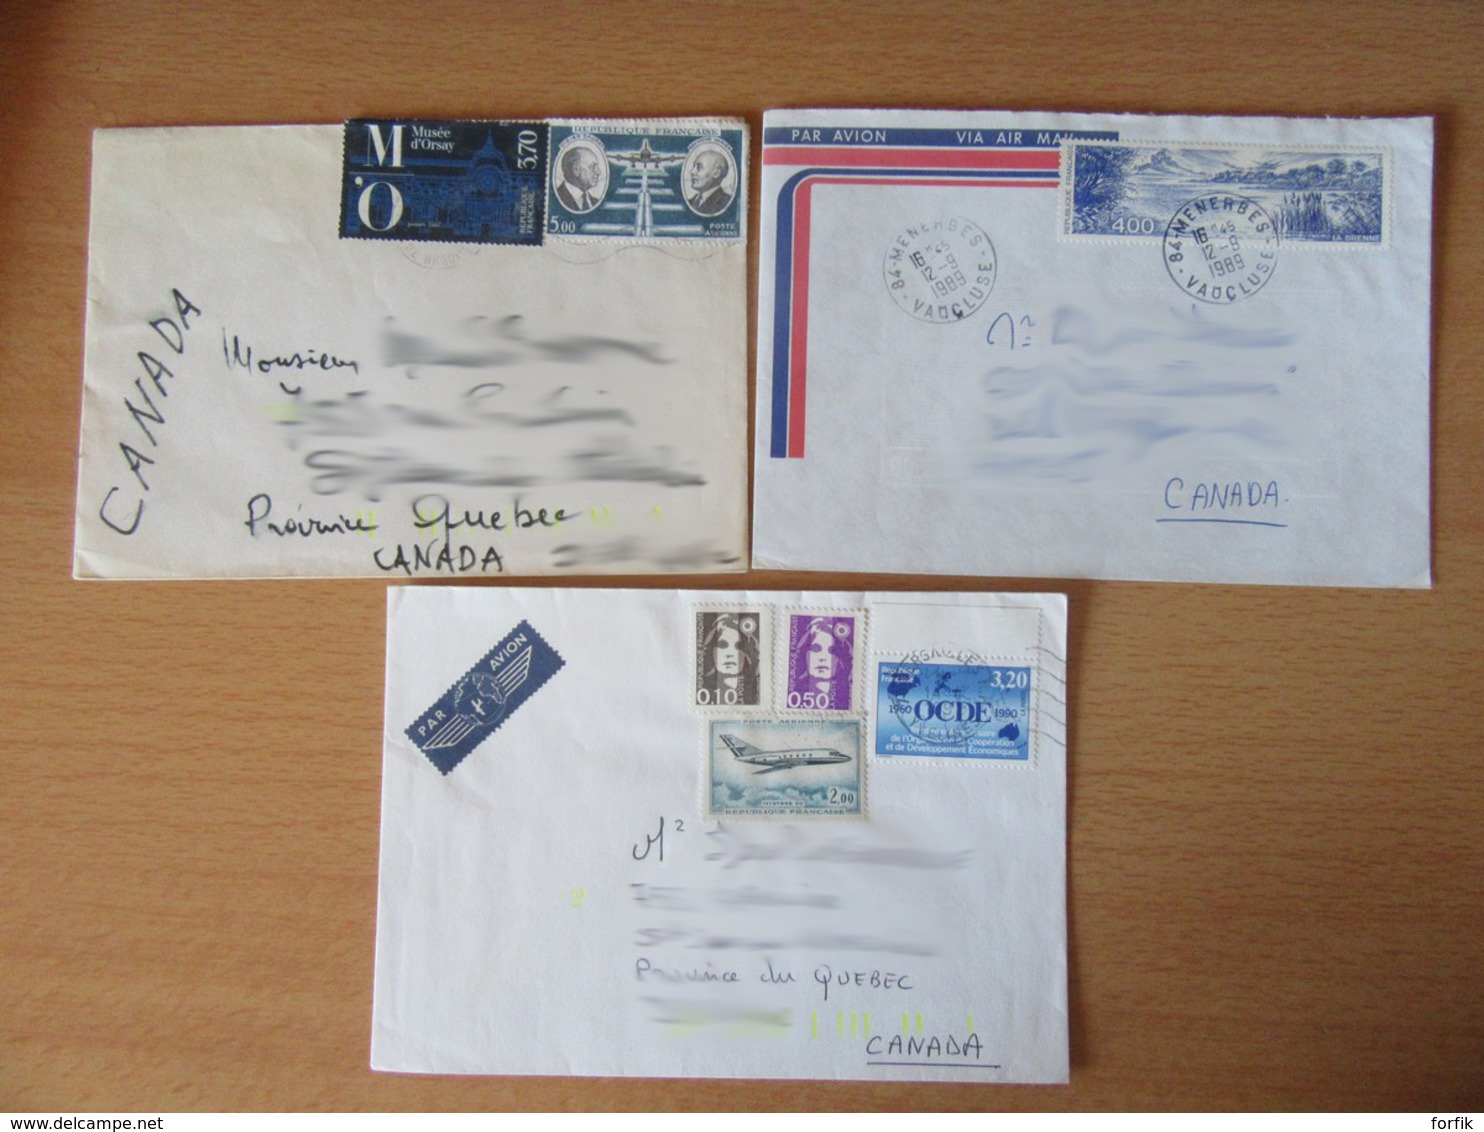 France vers Canada / Québec - Lot de 40 Enveloppes timbrées modernes - Gros affranchissements et timbres variés